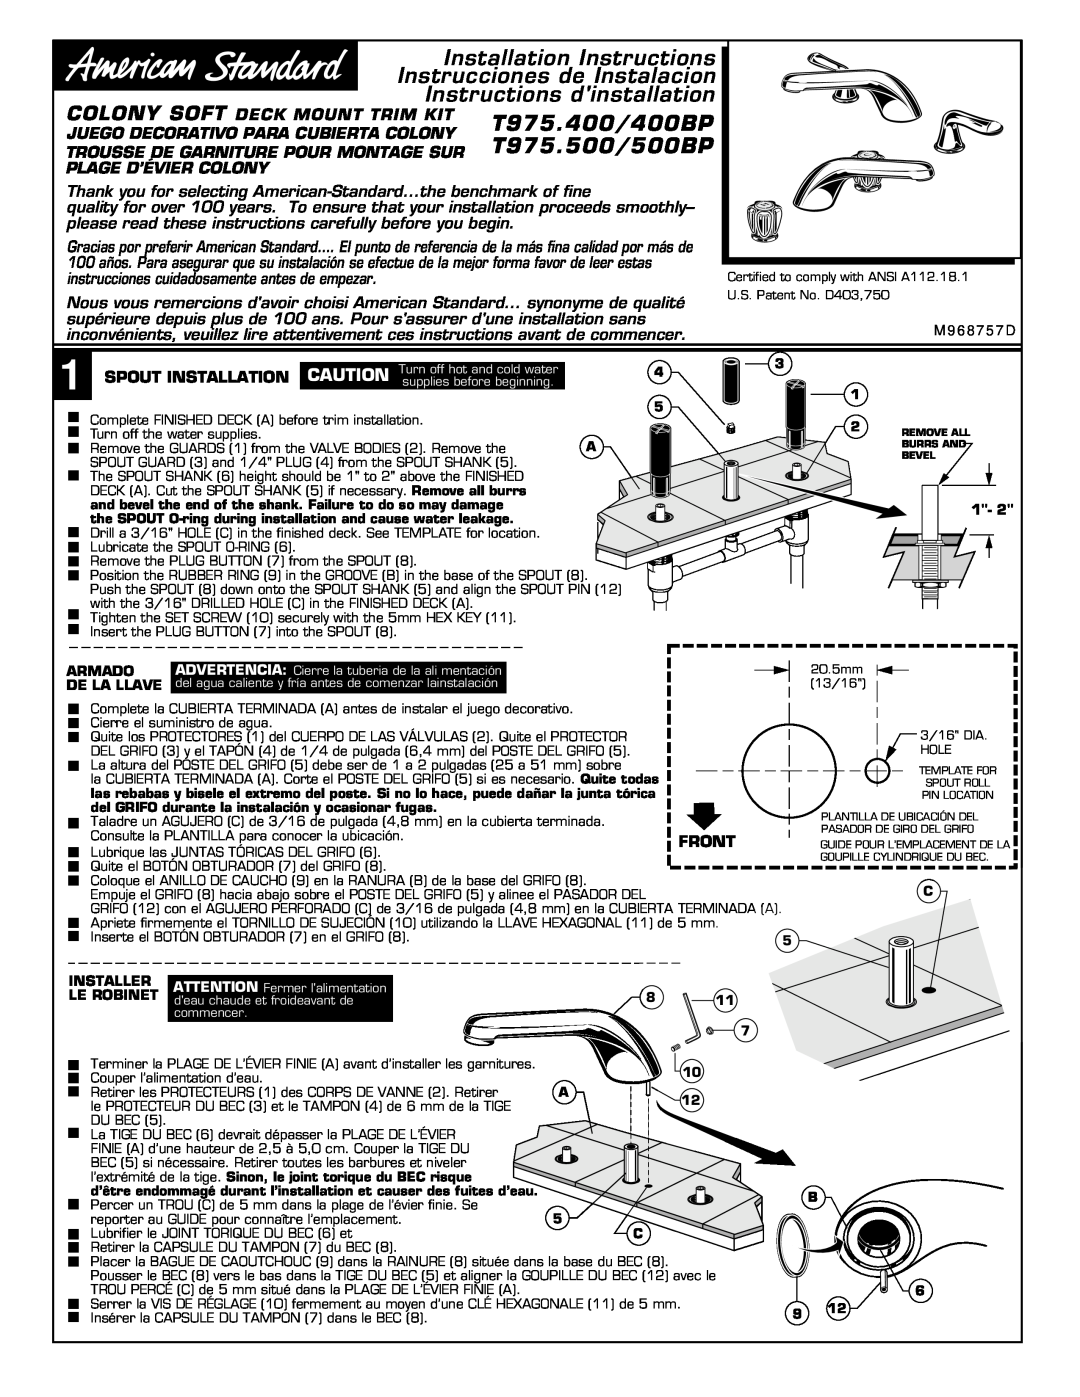 American Standard M968757D installation instructions T975.400/400BP, T975.500/500BP, Colony Soft Deck Mount Trim Kit 